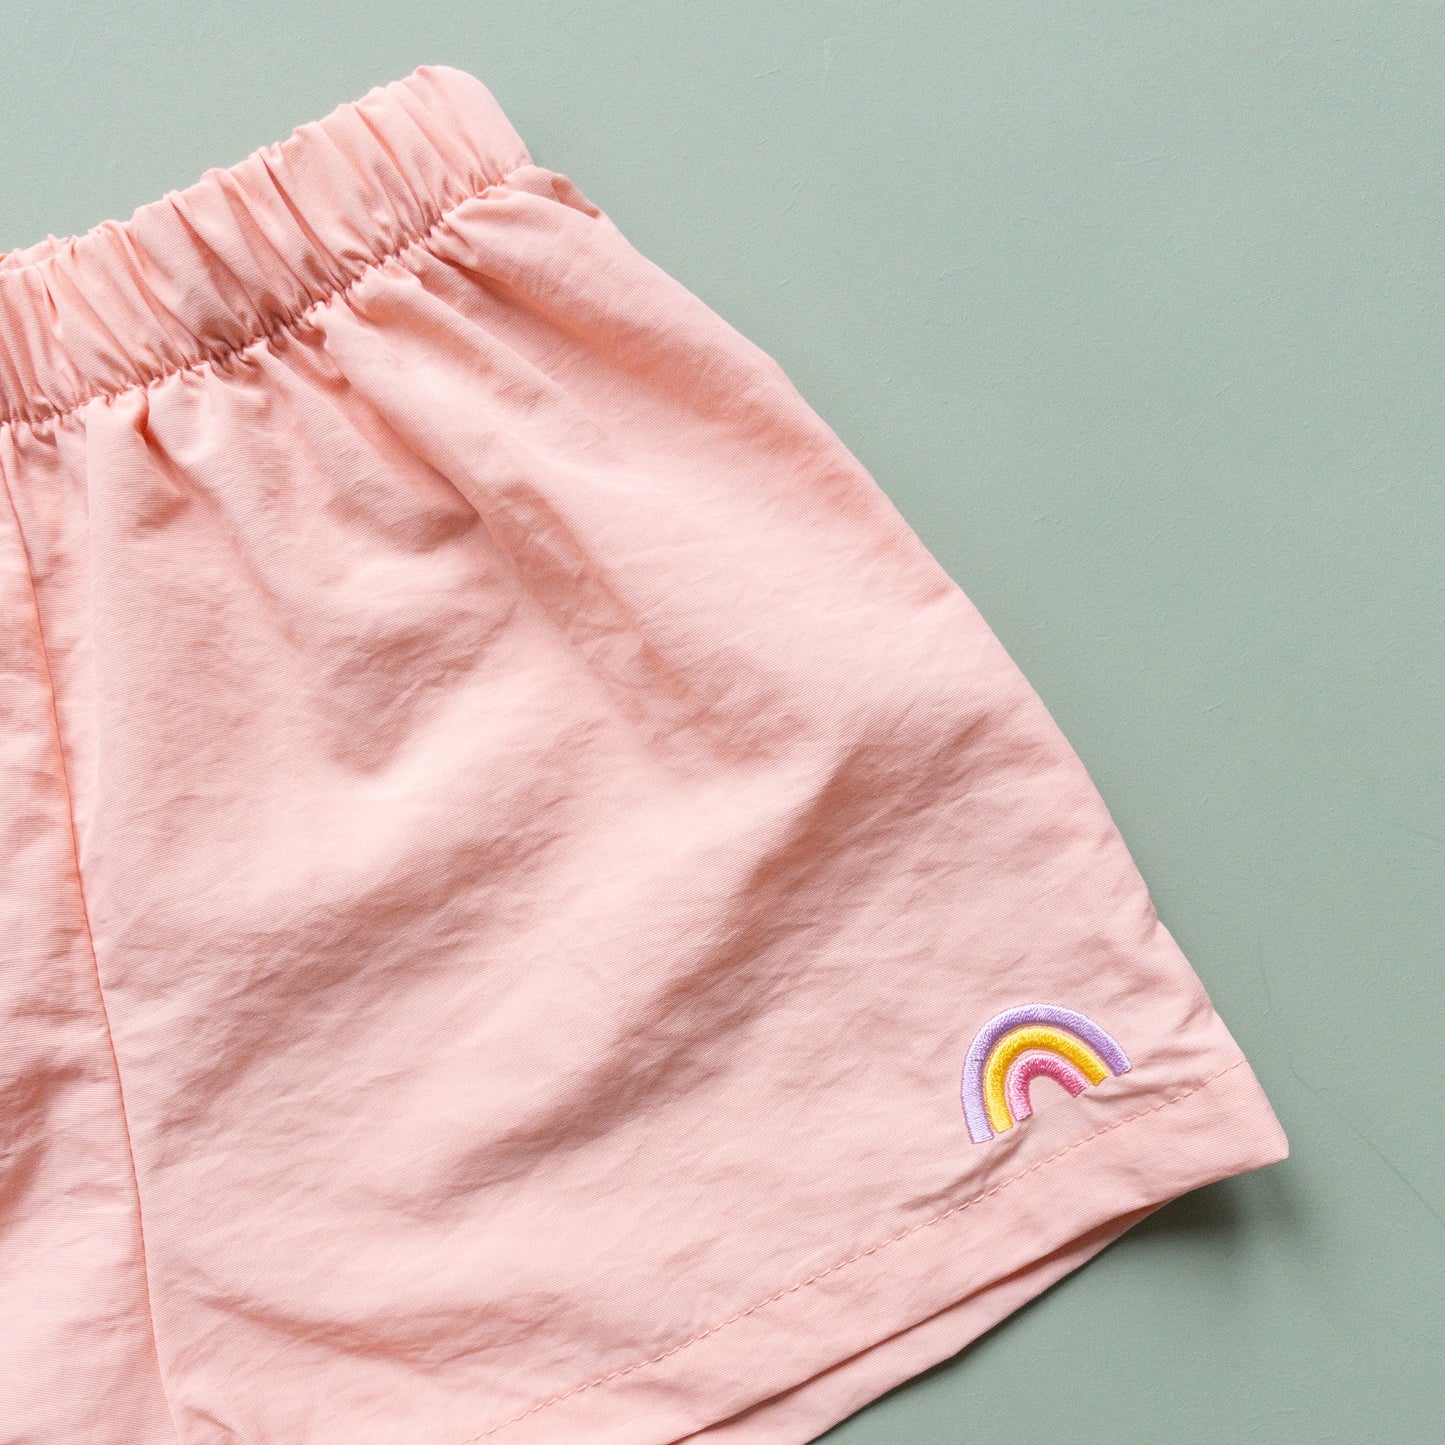 Pink Rainbow Shorts